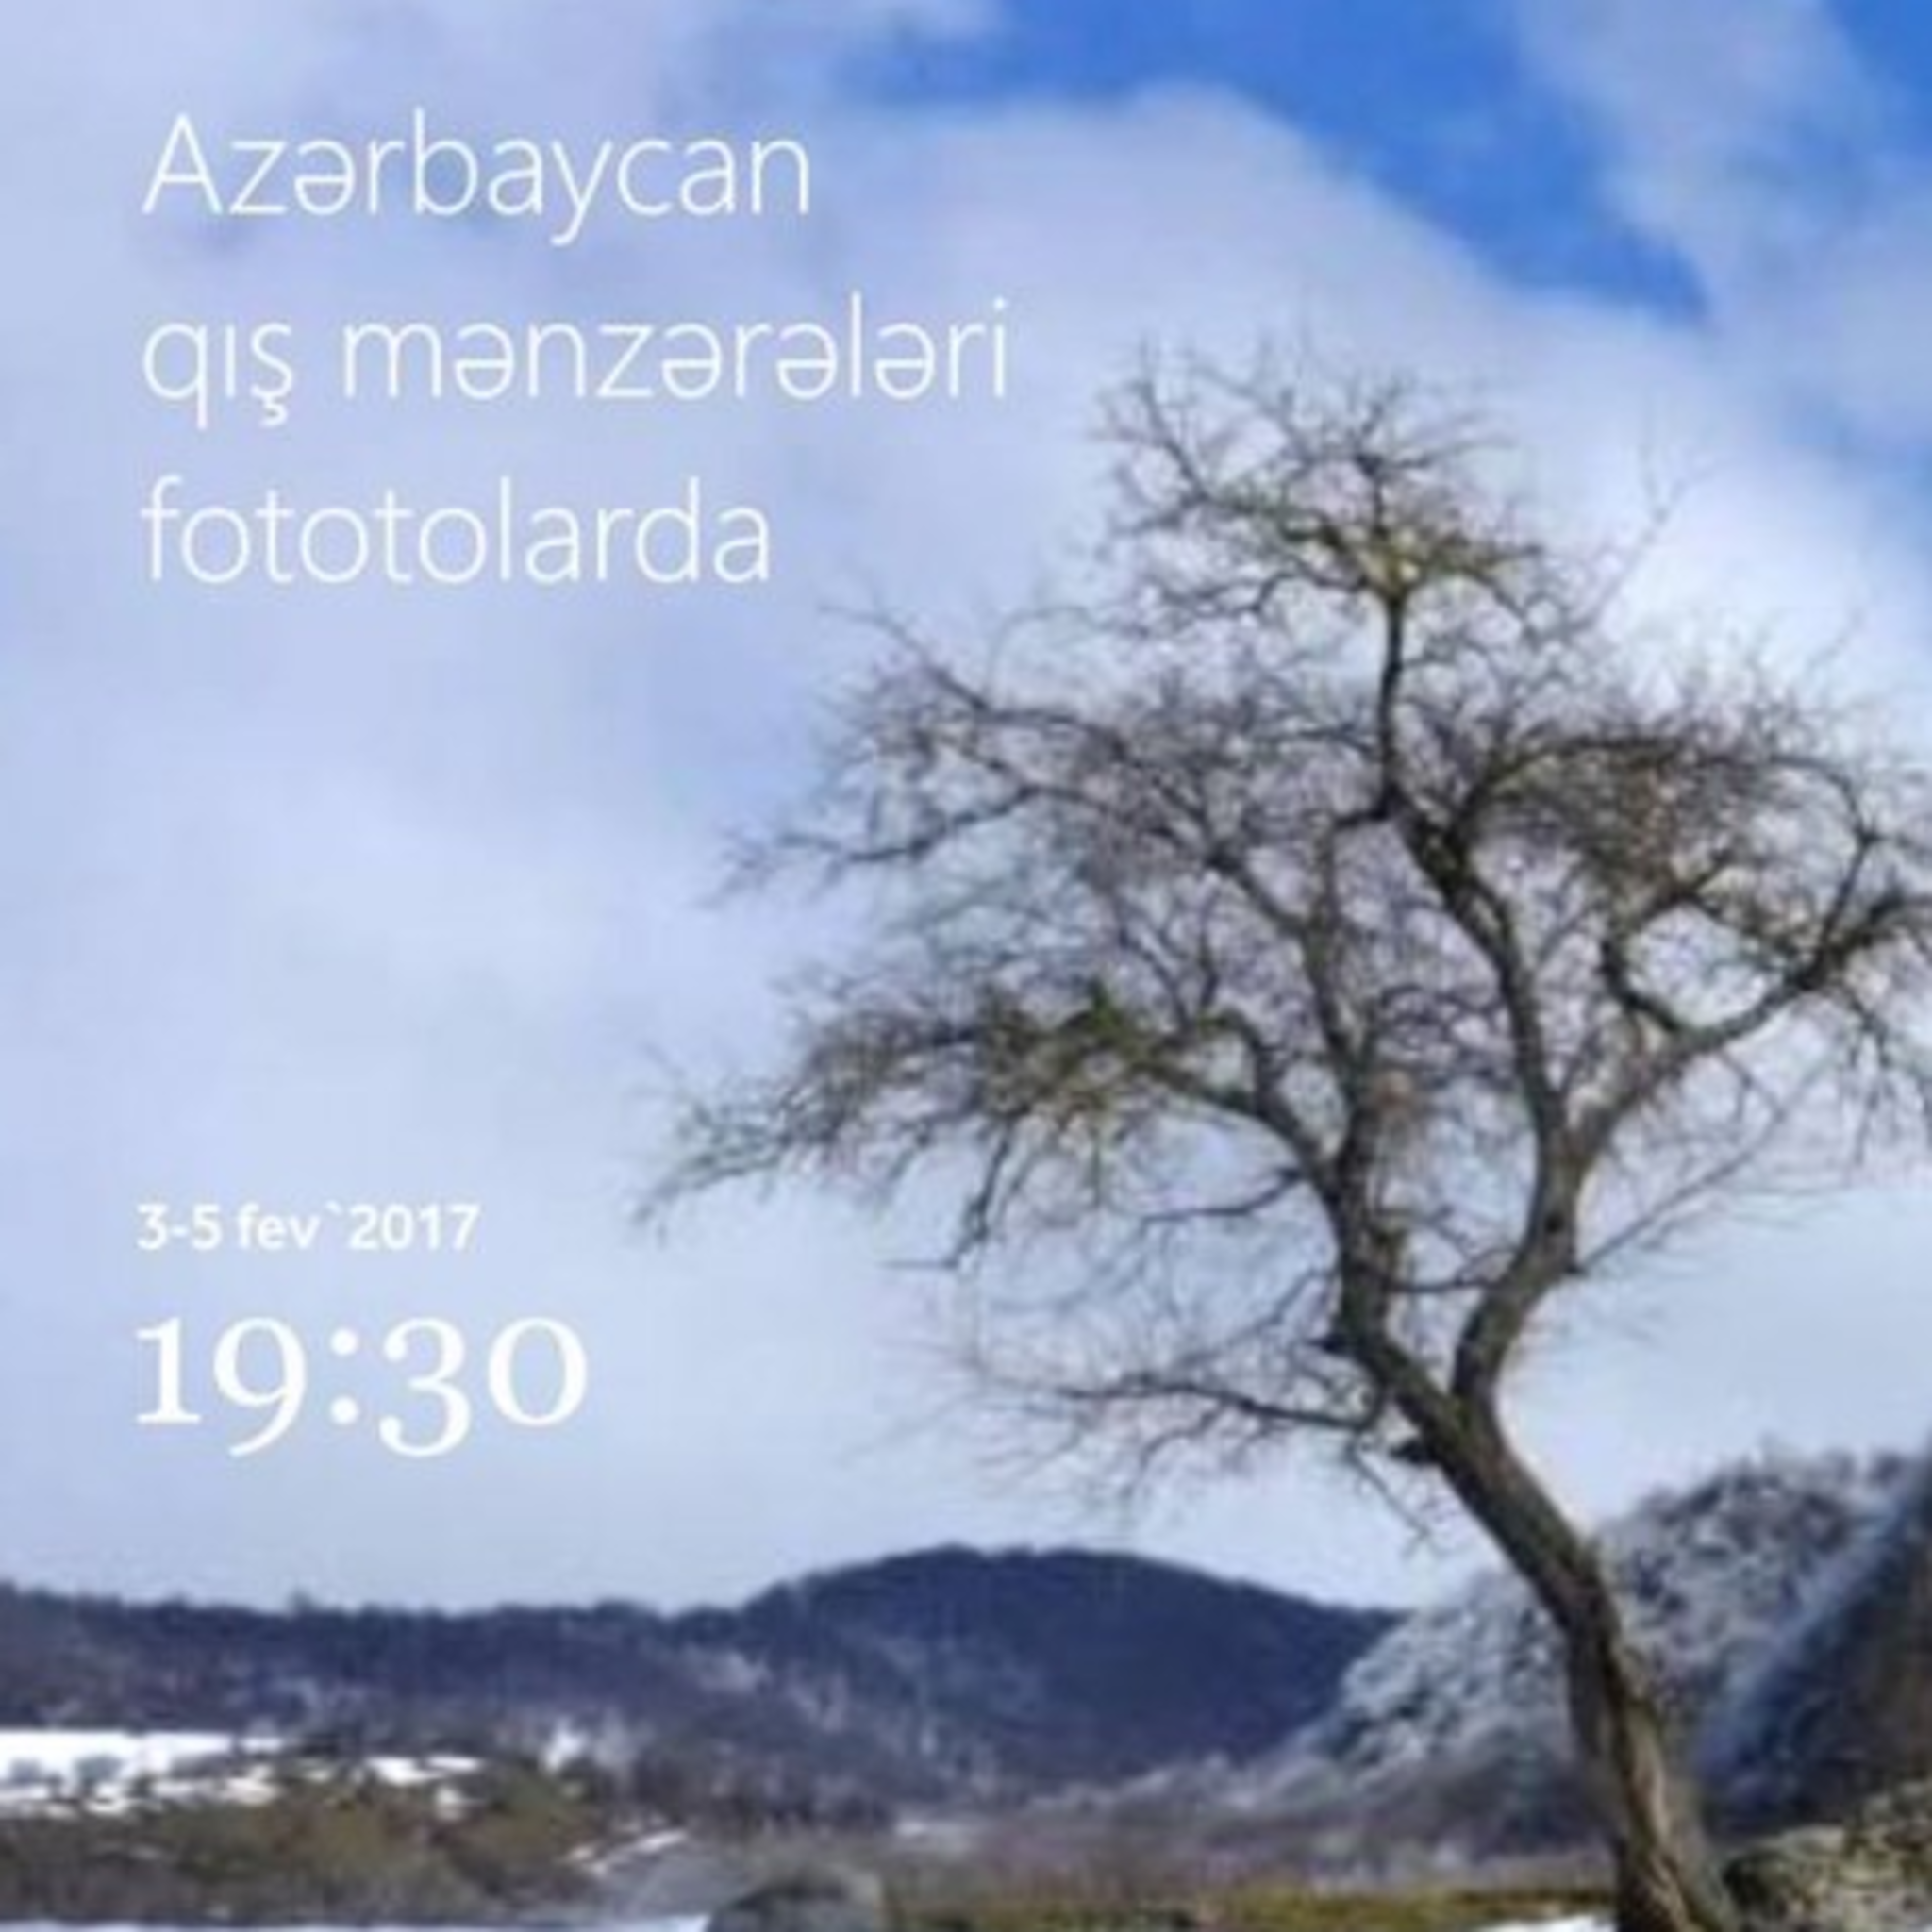 Photo exhibition Winter Landscapes of Azerbaijan